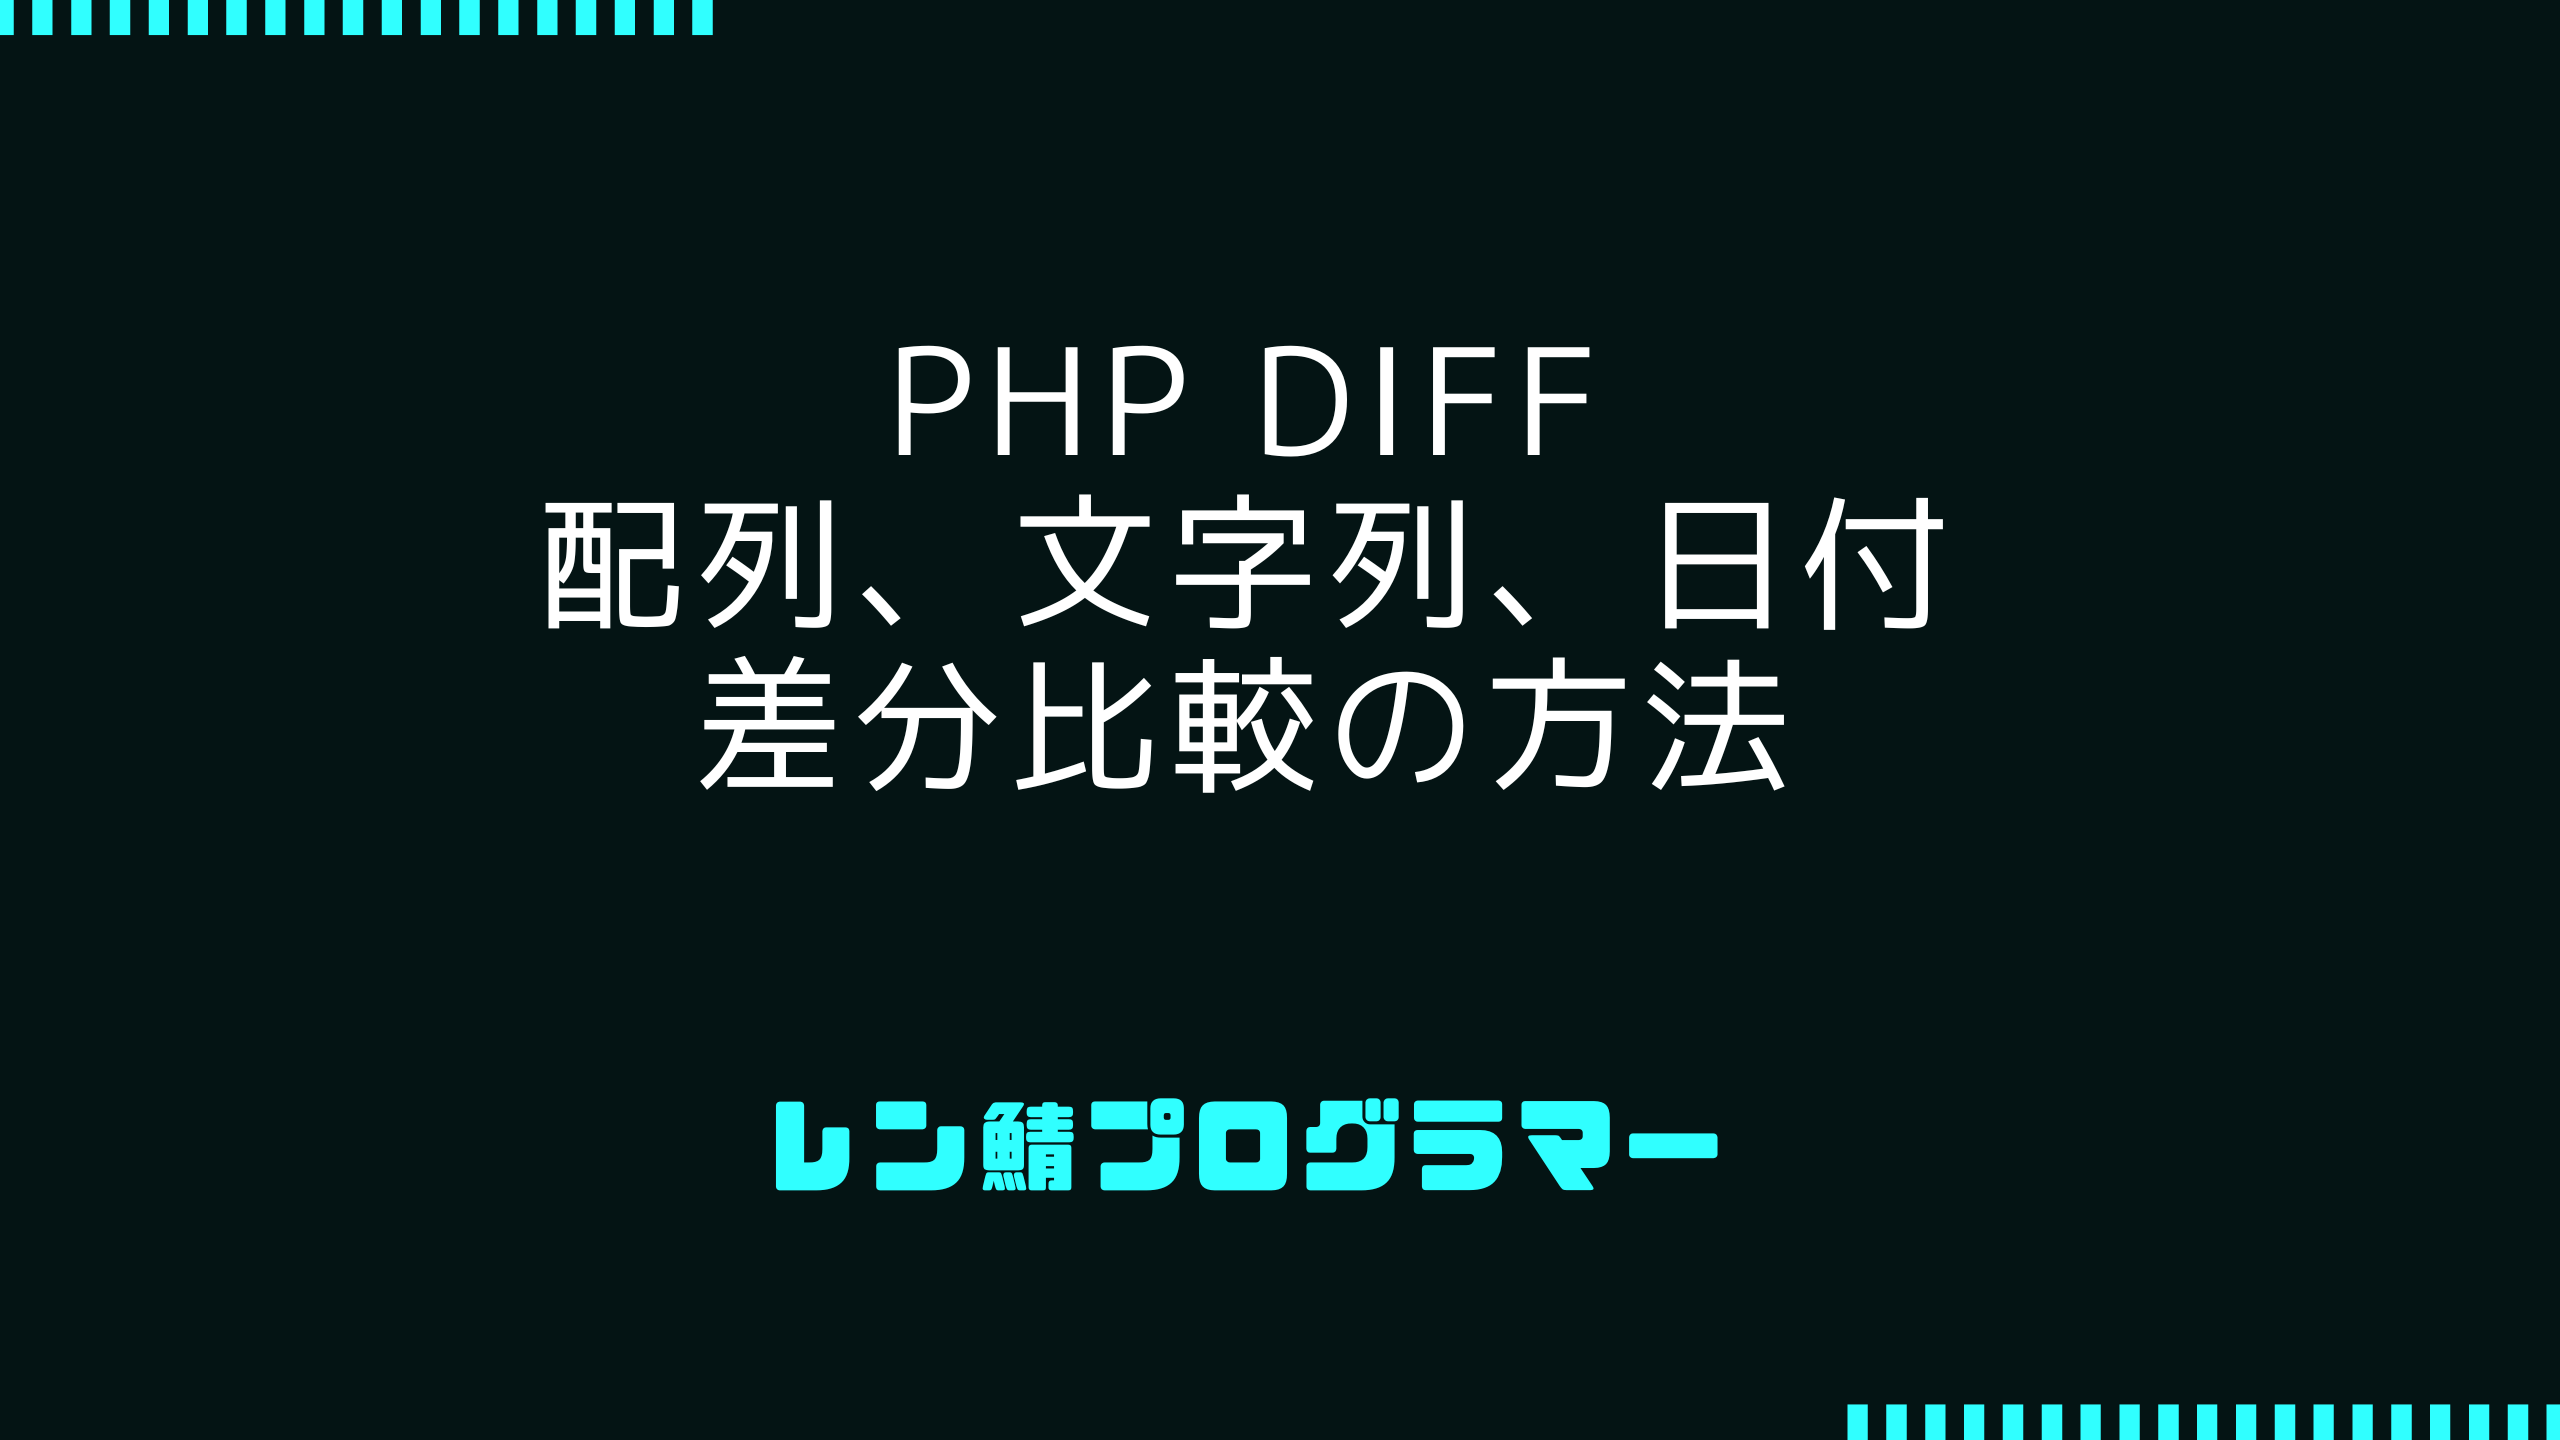 PHPでdiff | 配列から文字列までの差分比較に対応する方法